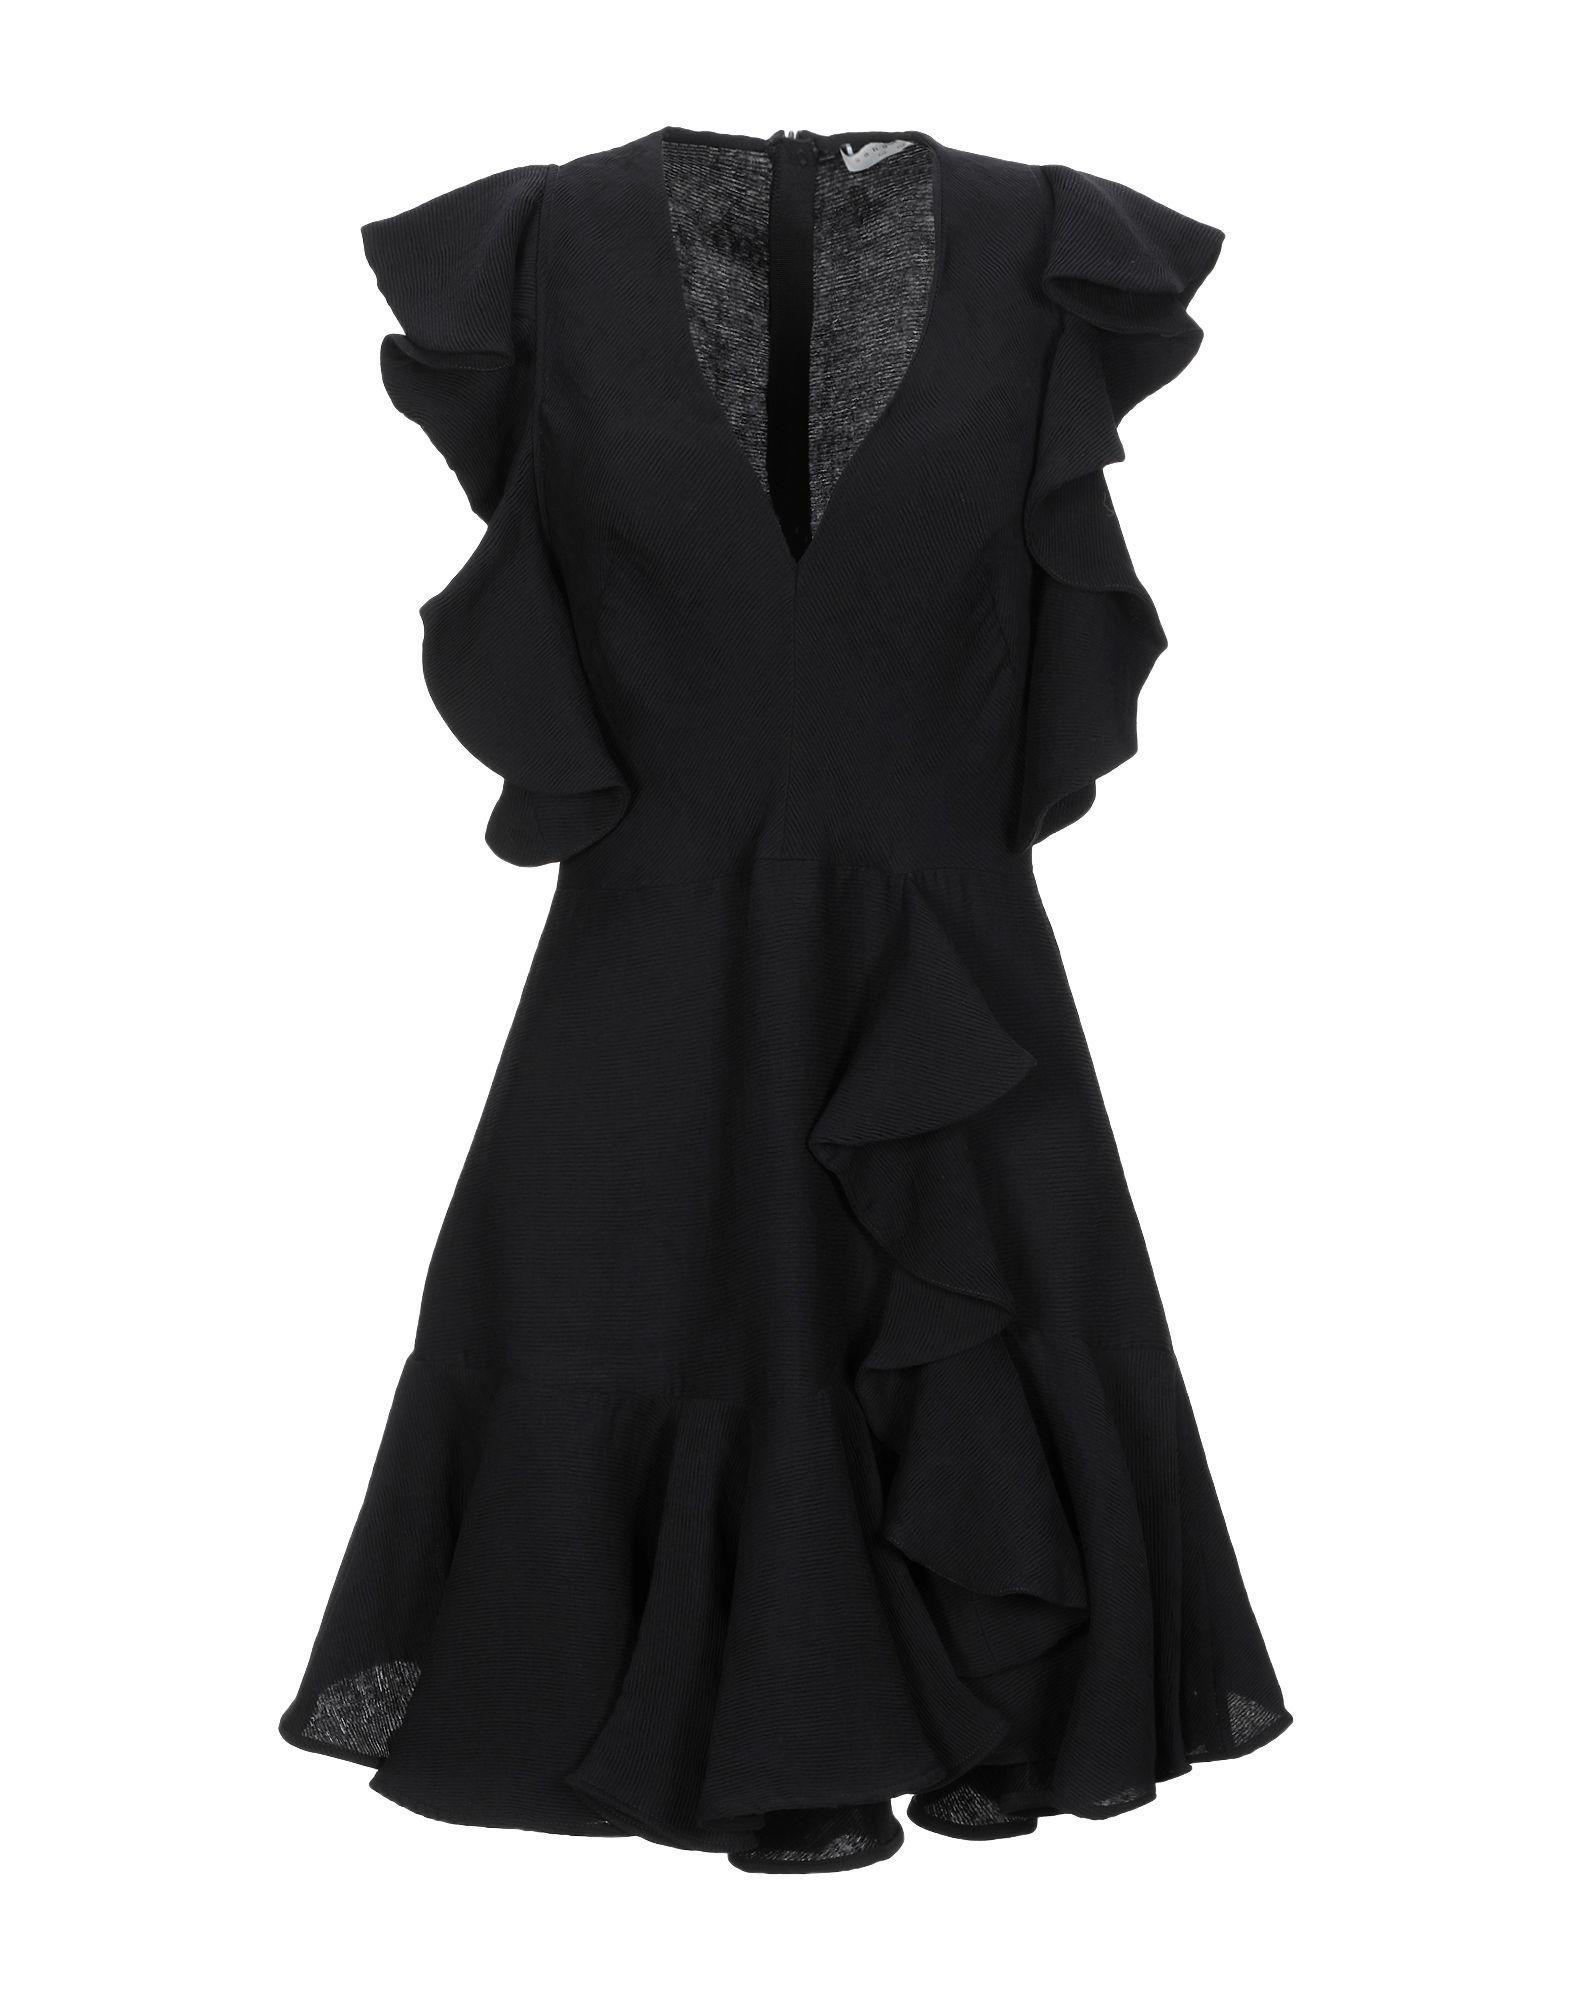 Sandro Synthetic Short Dress in Black - Lyst